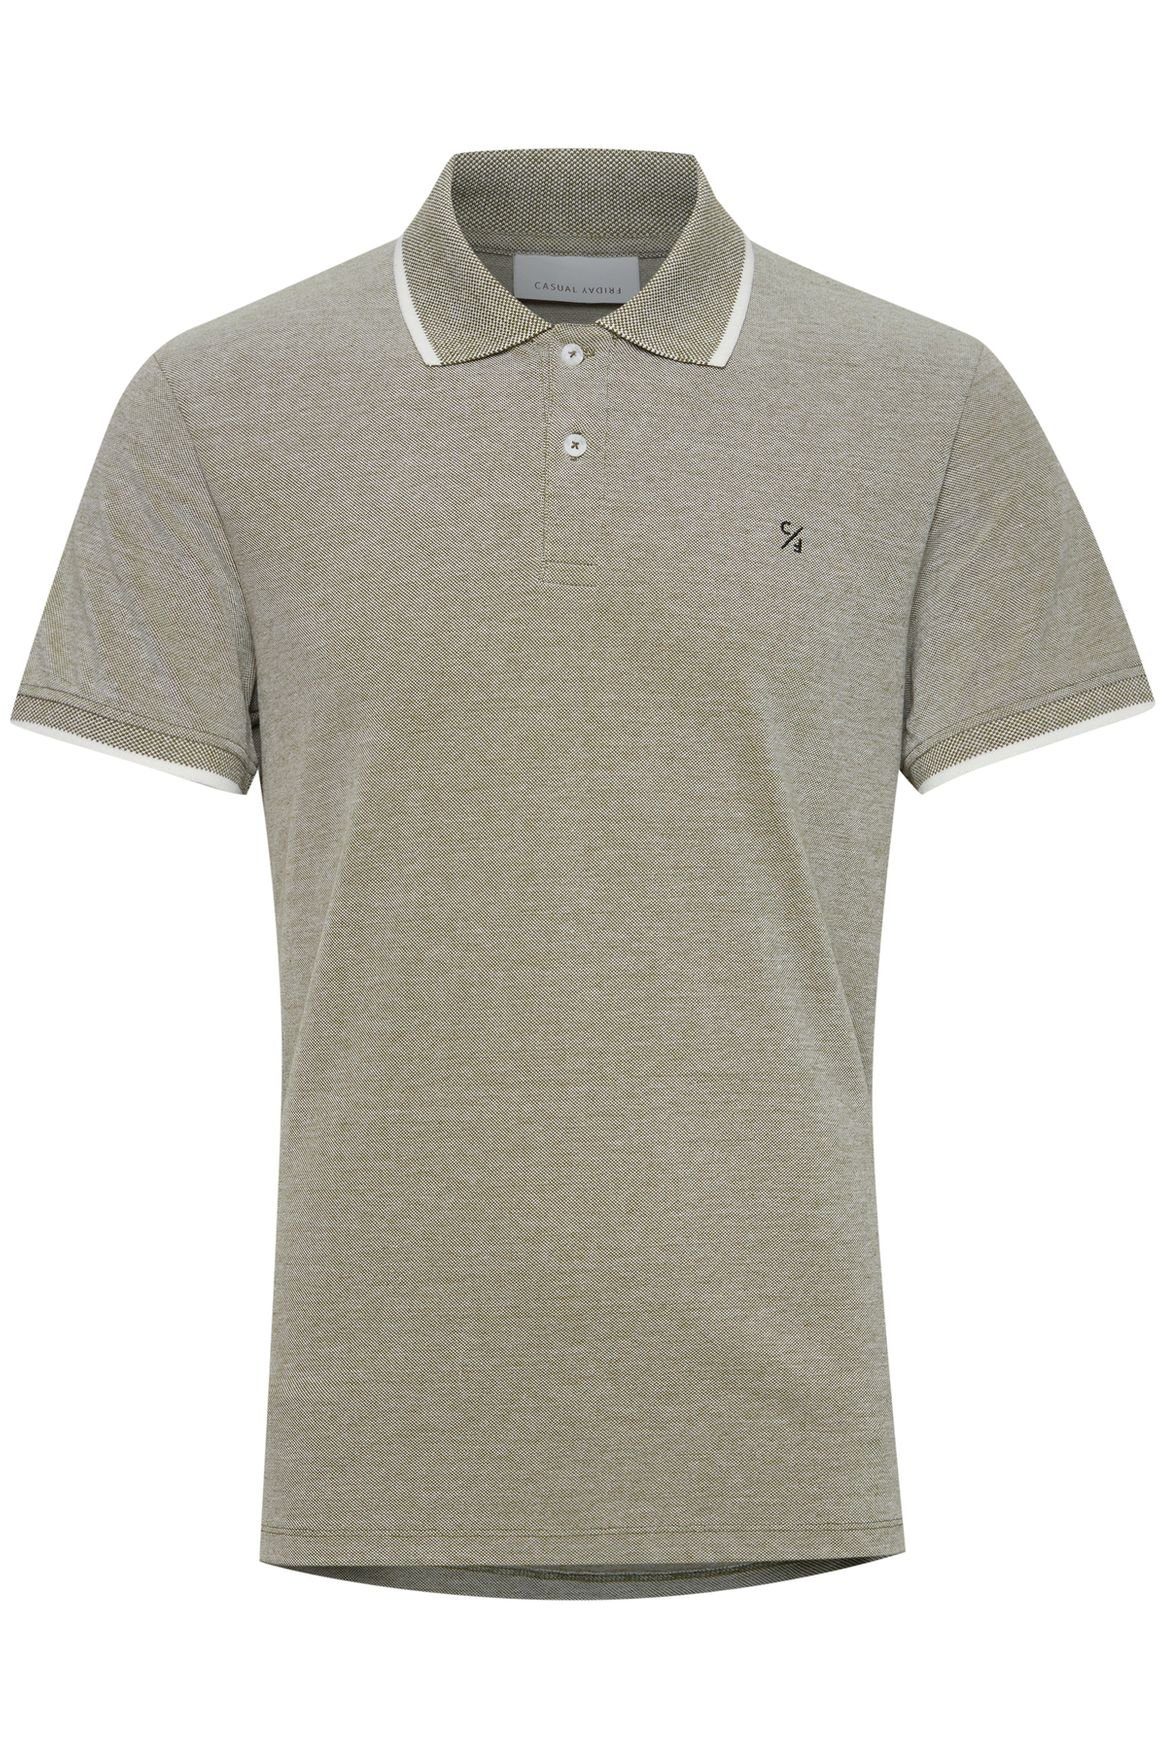 Casual Poloshirt Kurzarm Regular Hemd TRISTAN Baumwolle Shirt Fit Golf Basic Polo Friday in 4411 Olive